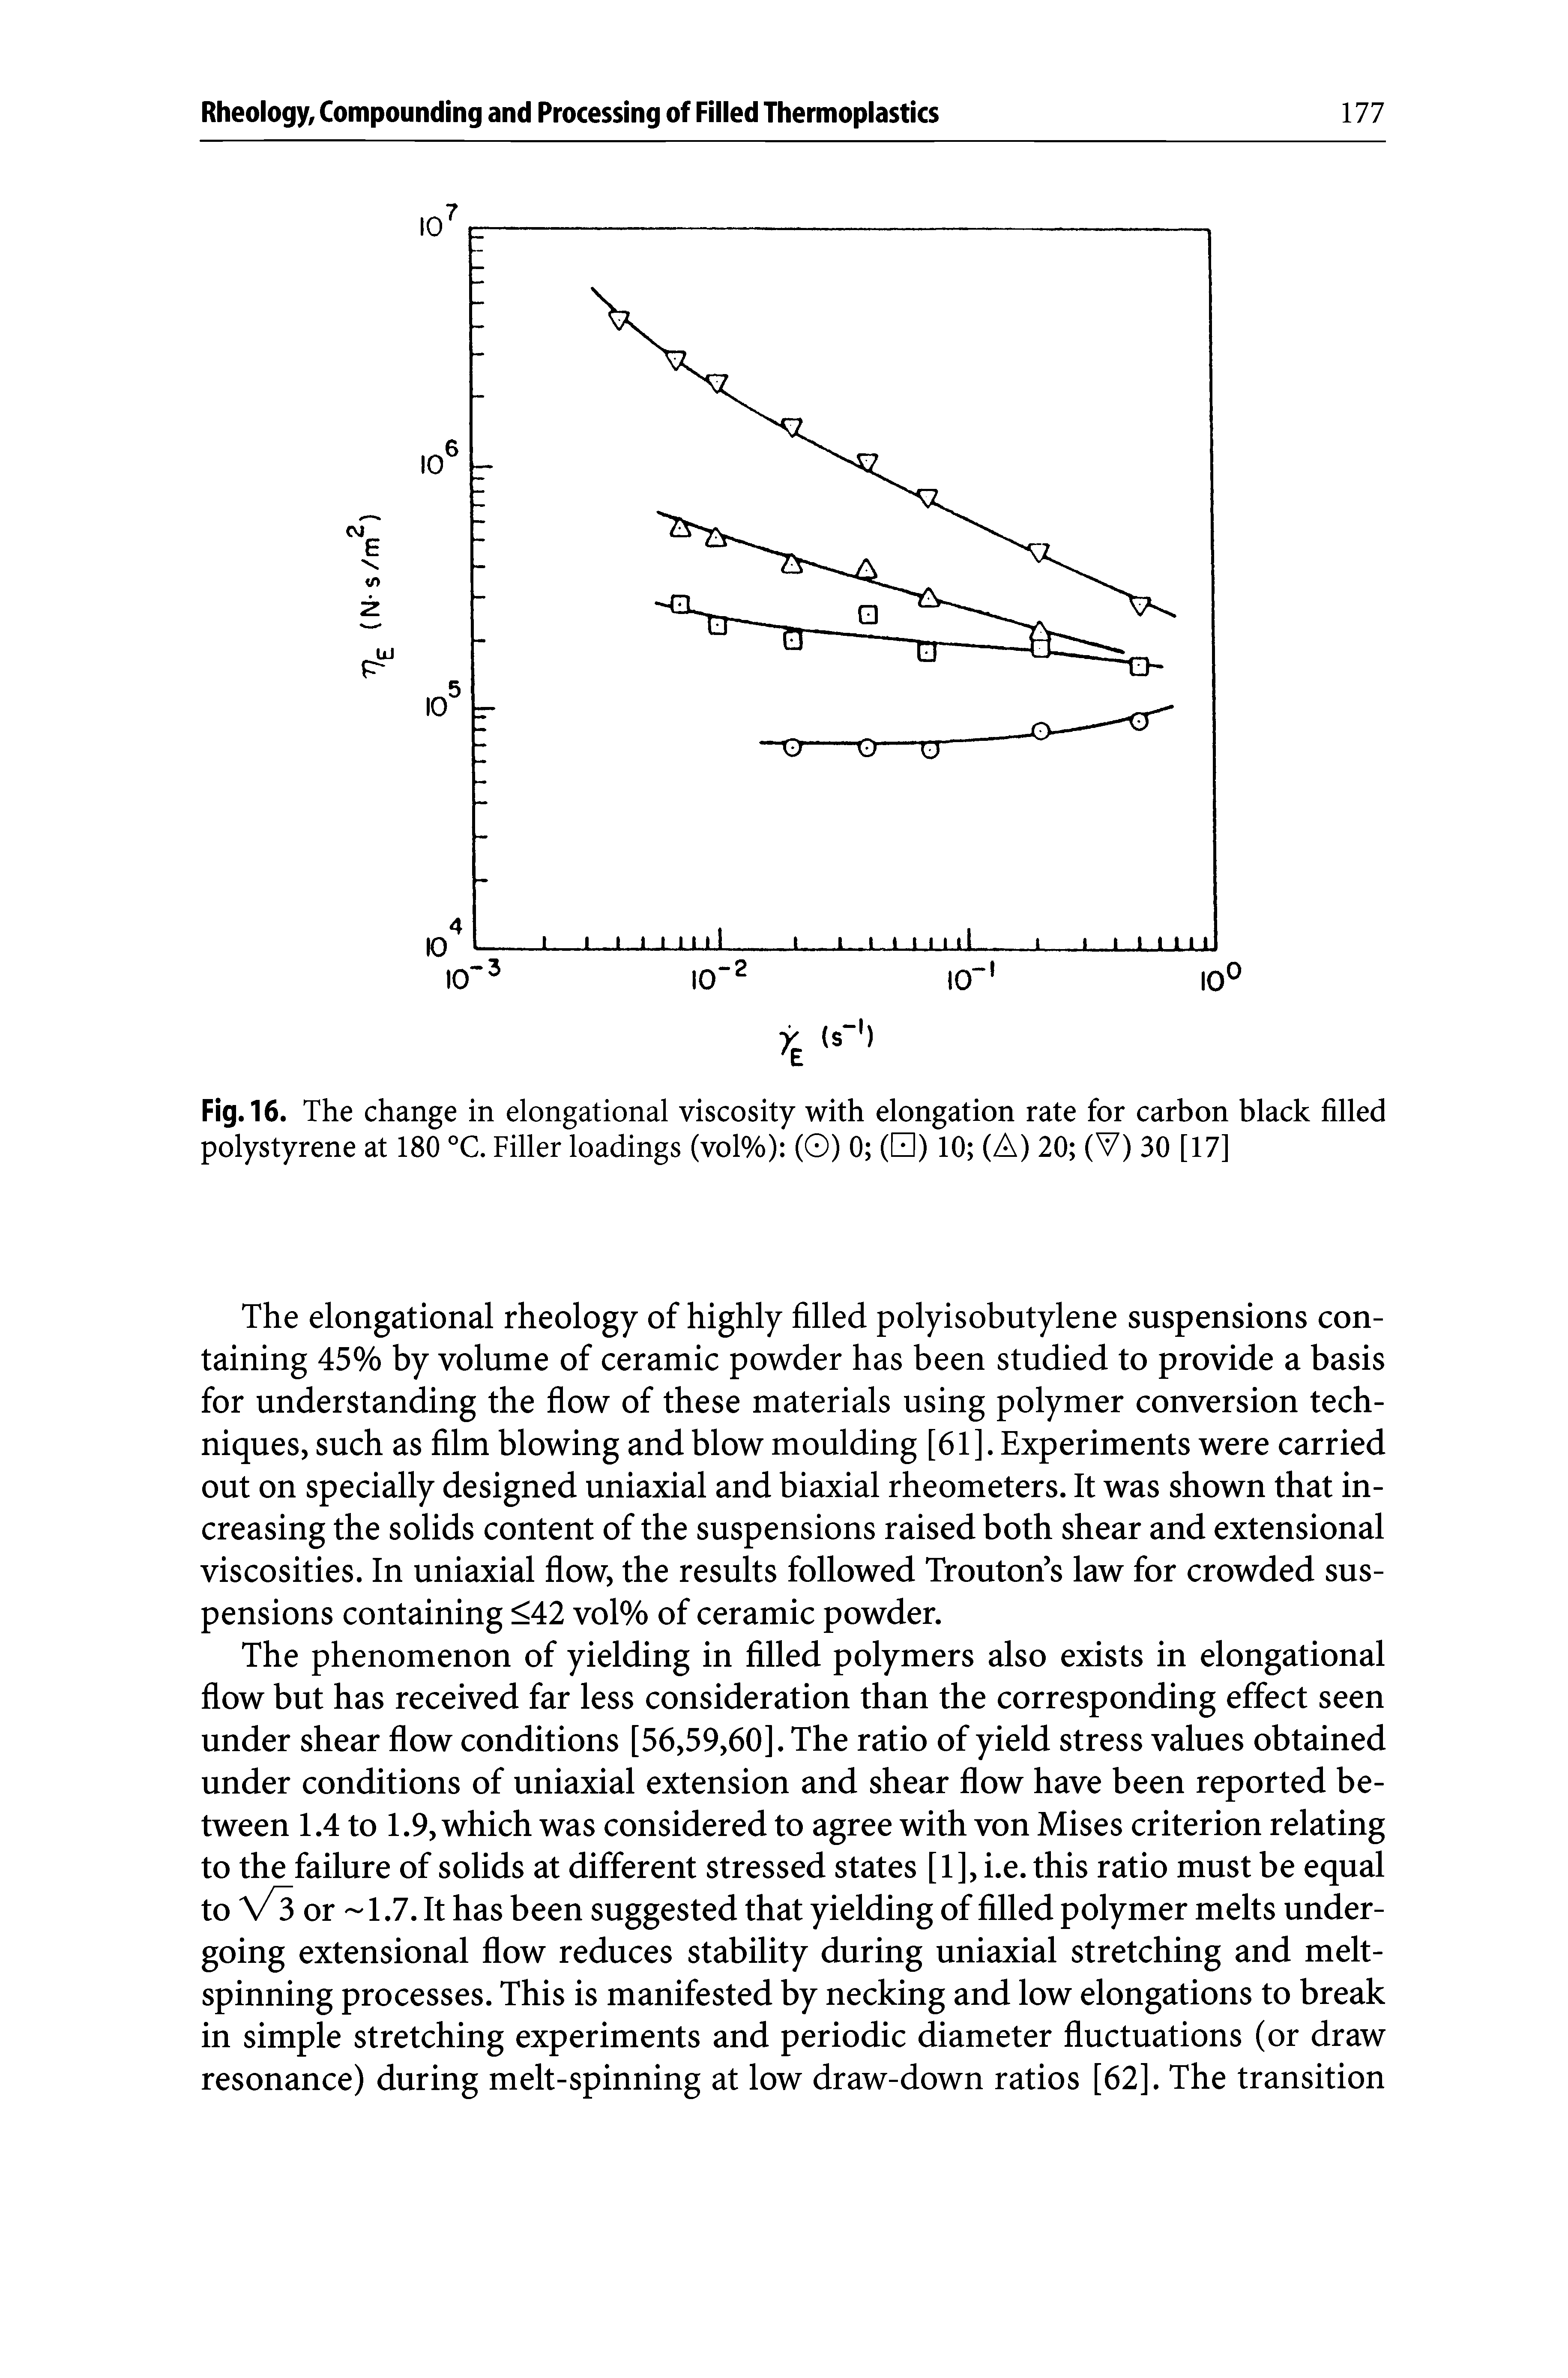 Fig. 16. The change in elongational viscosity with elongation rate for carbon black filled polystyrene at 180 °C. Filler loadings (vol%) (O) 0 ( ) 10 (A) 20 (V) 30 [17]...